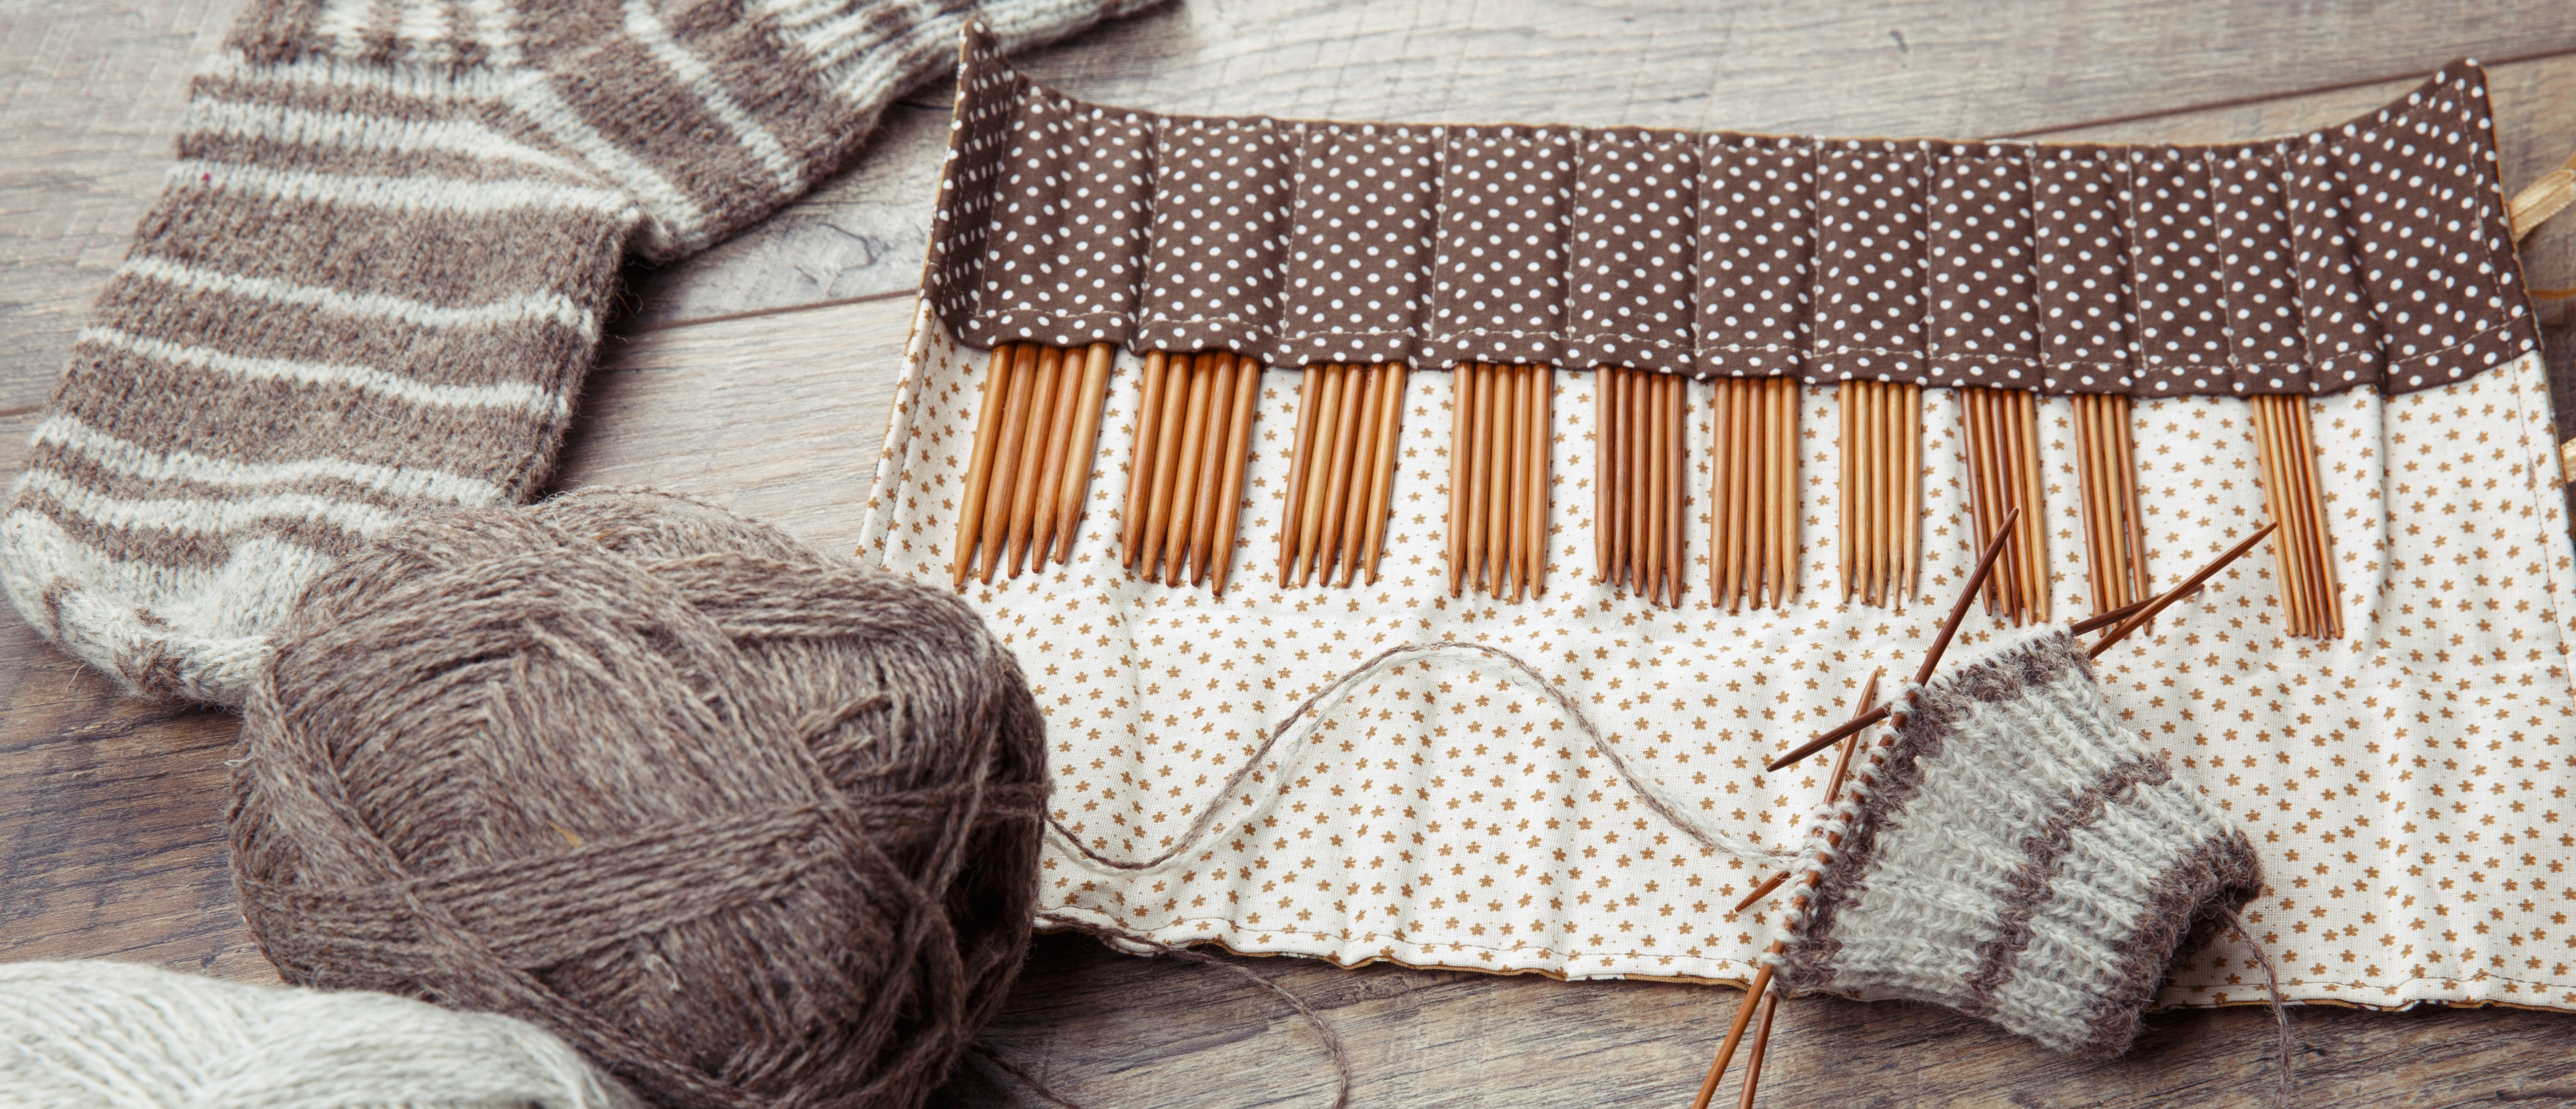 Brown yarn and knitting needles knit a sock